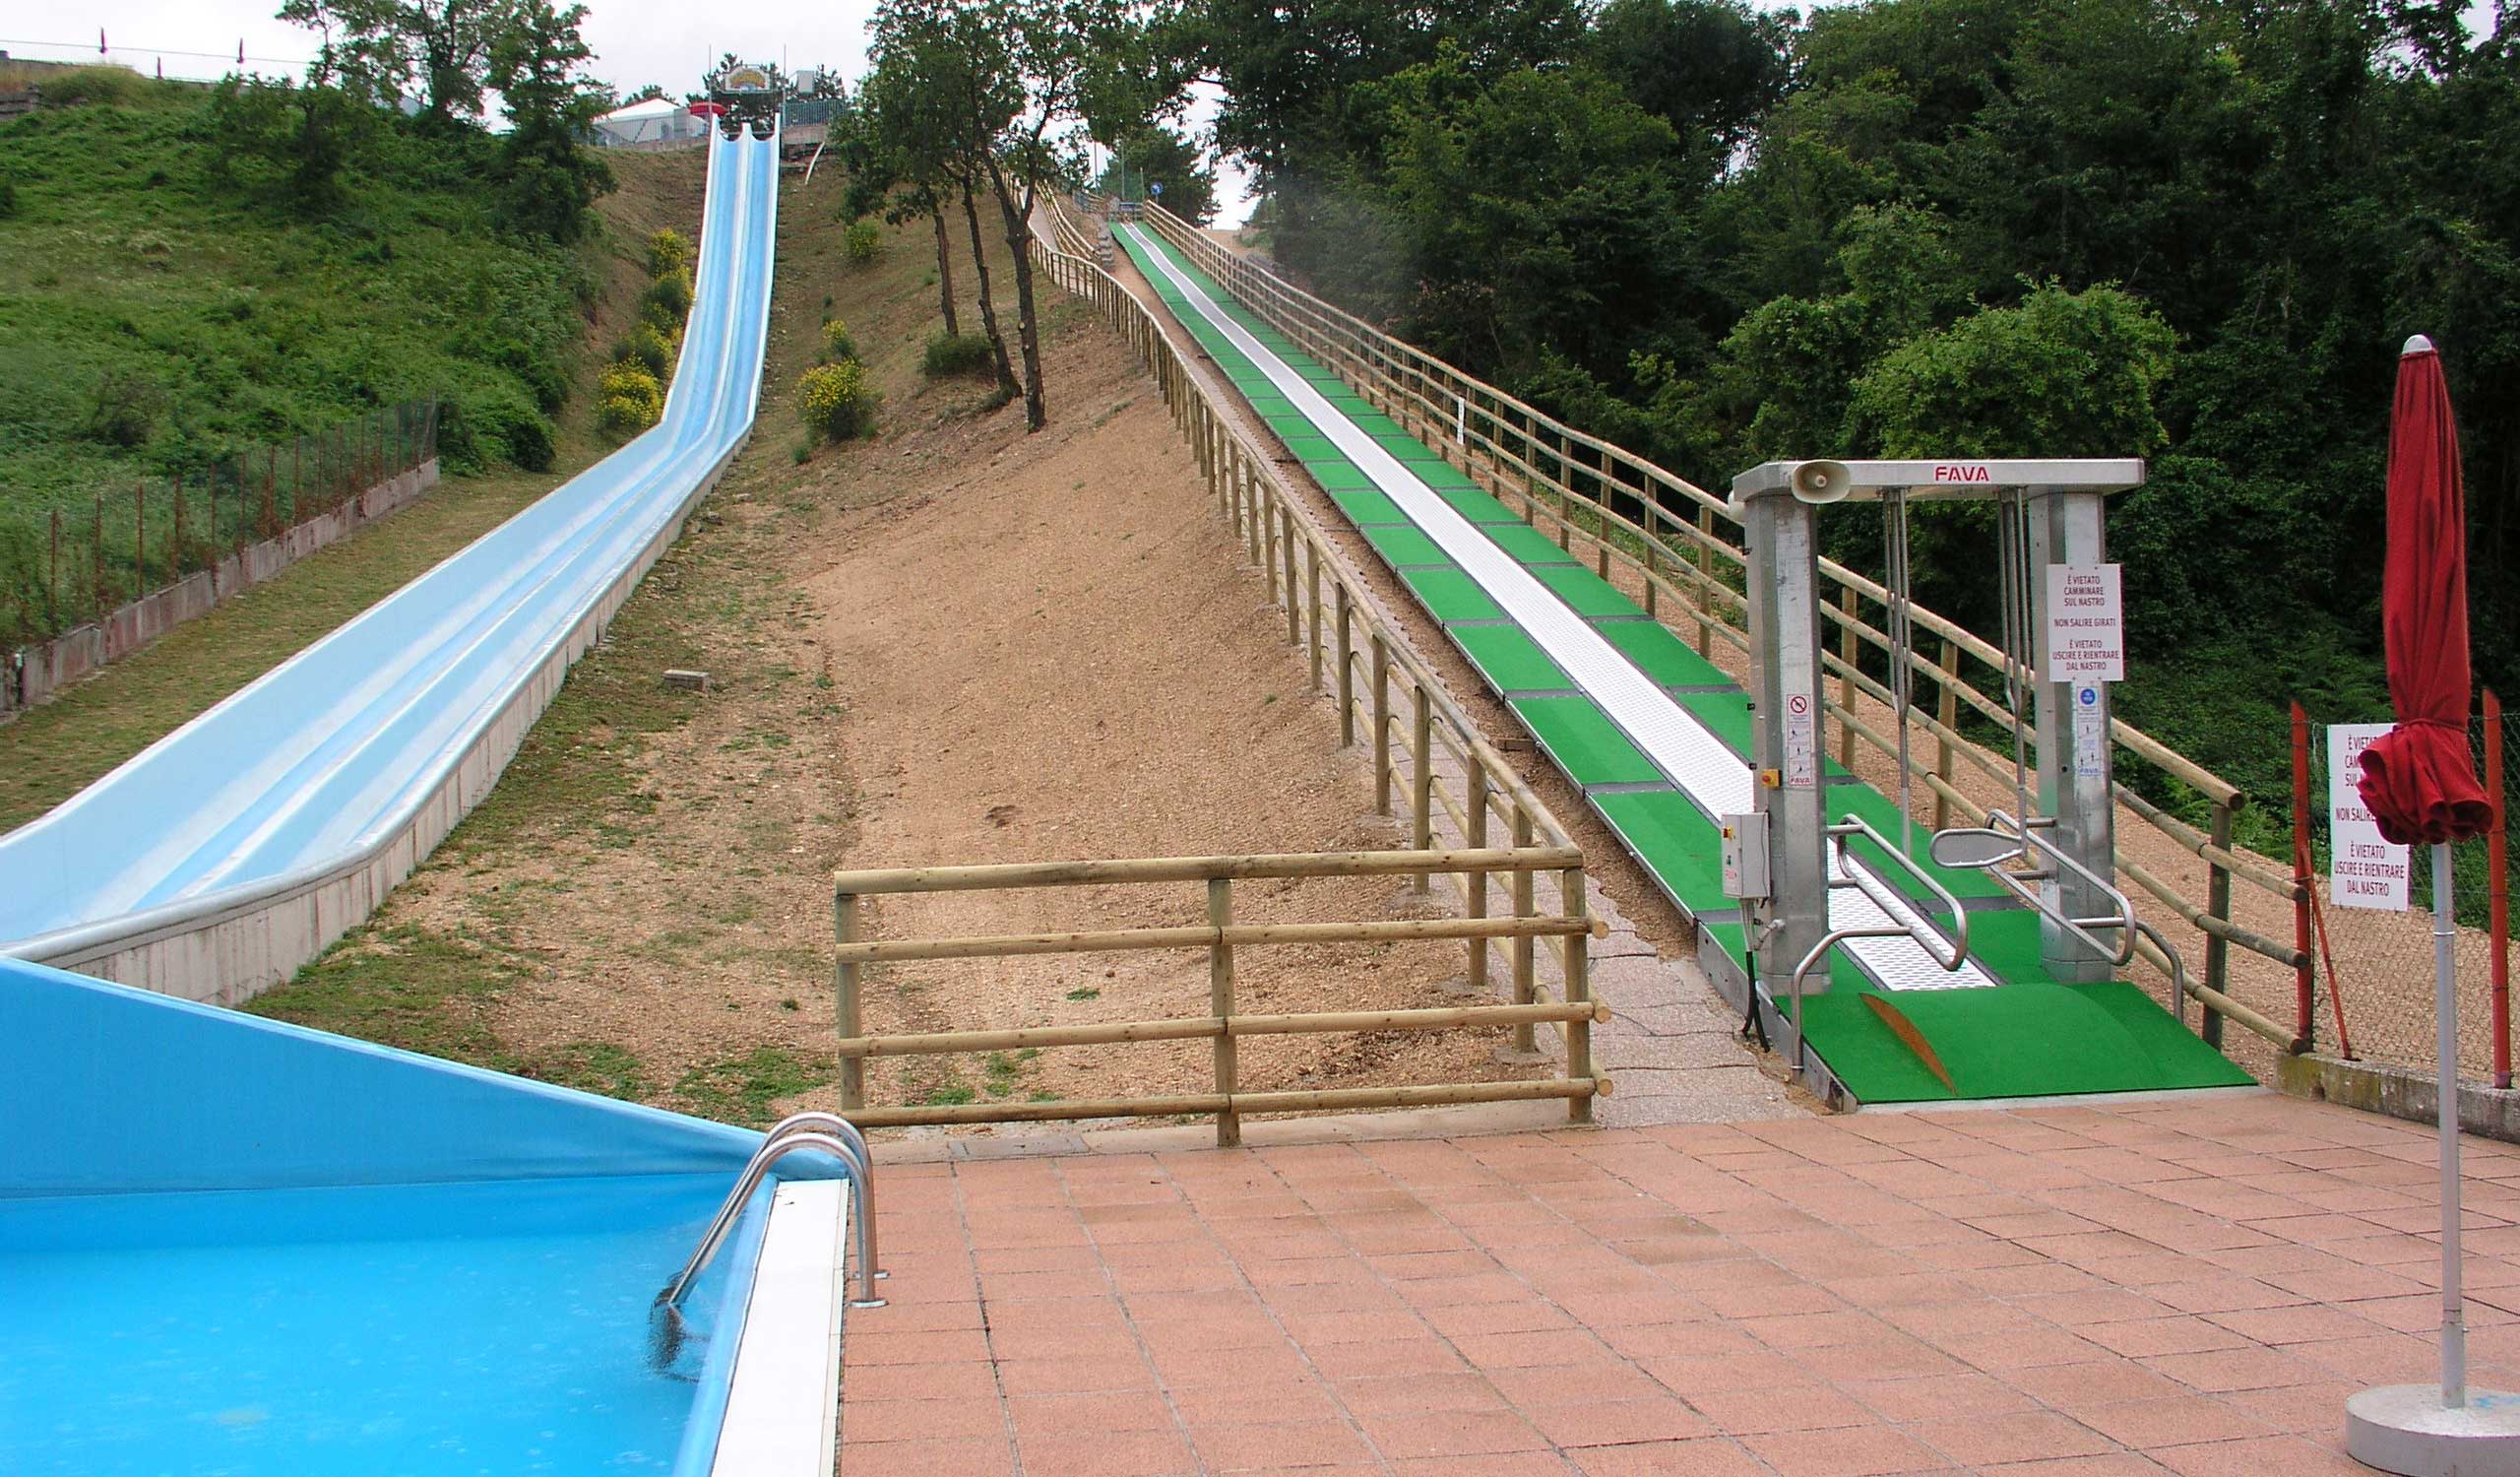 Conveyor belt for Skiers